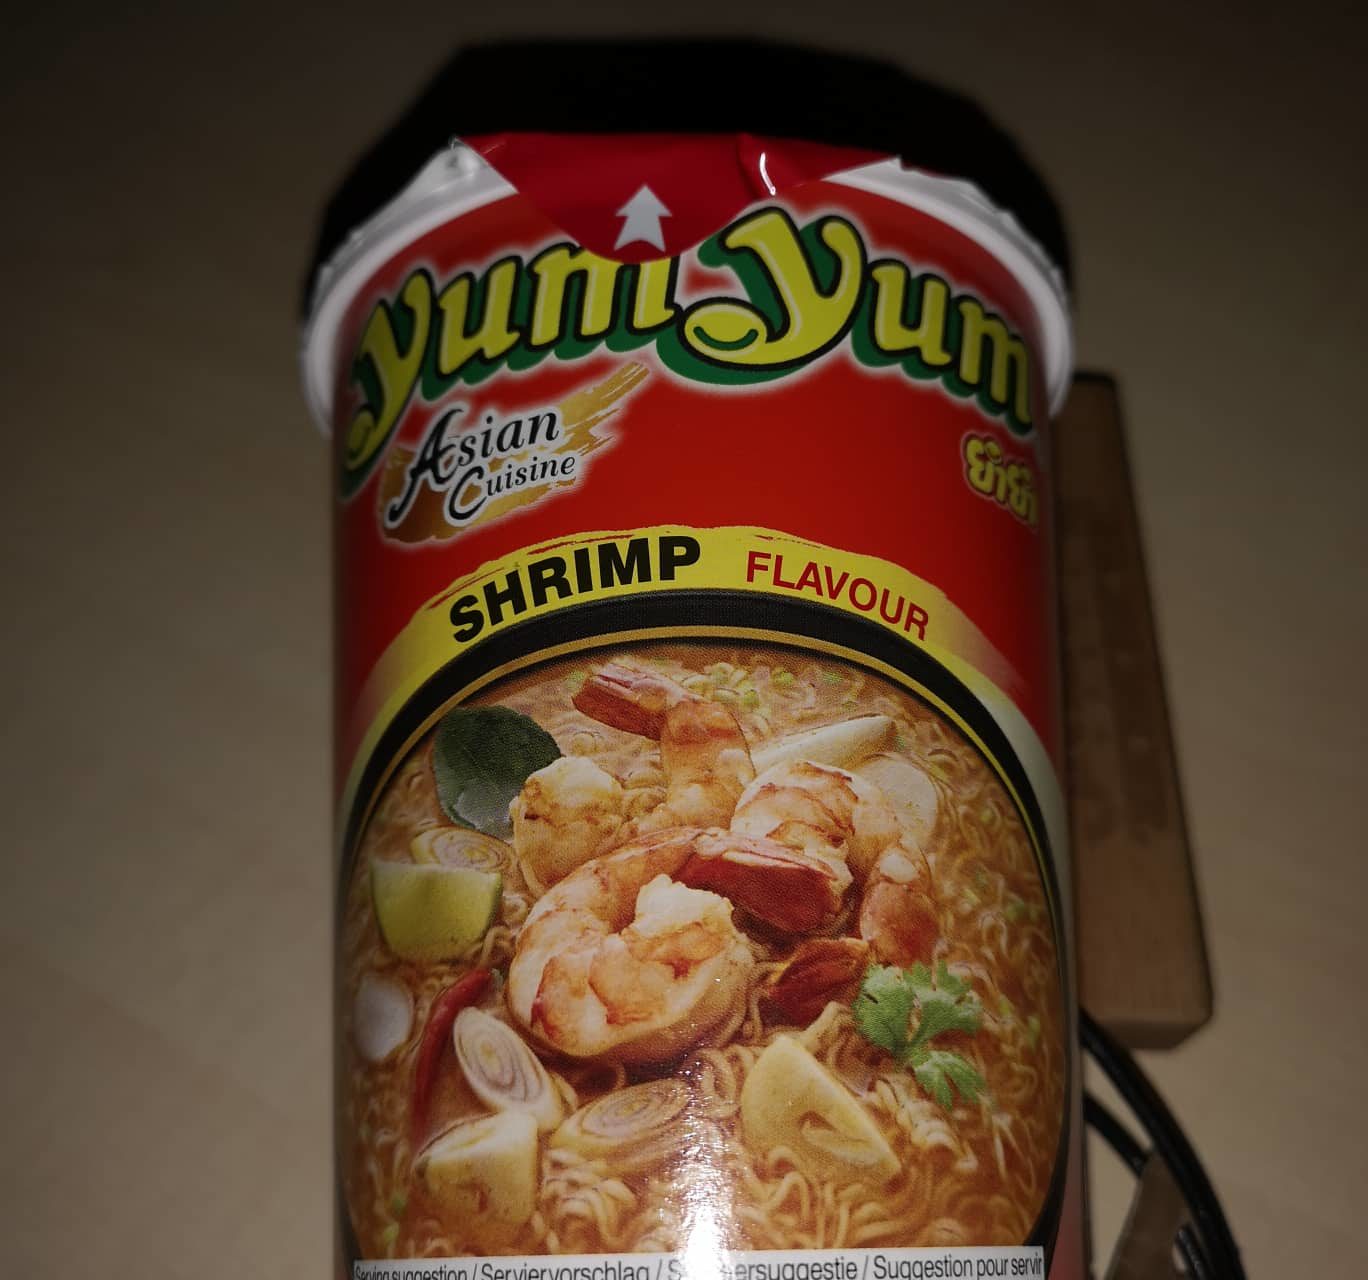 #1738: YumYum Asian Cuisine "Shrimp Flavour" Cup (Update 2022)